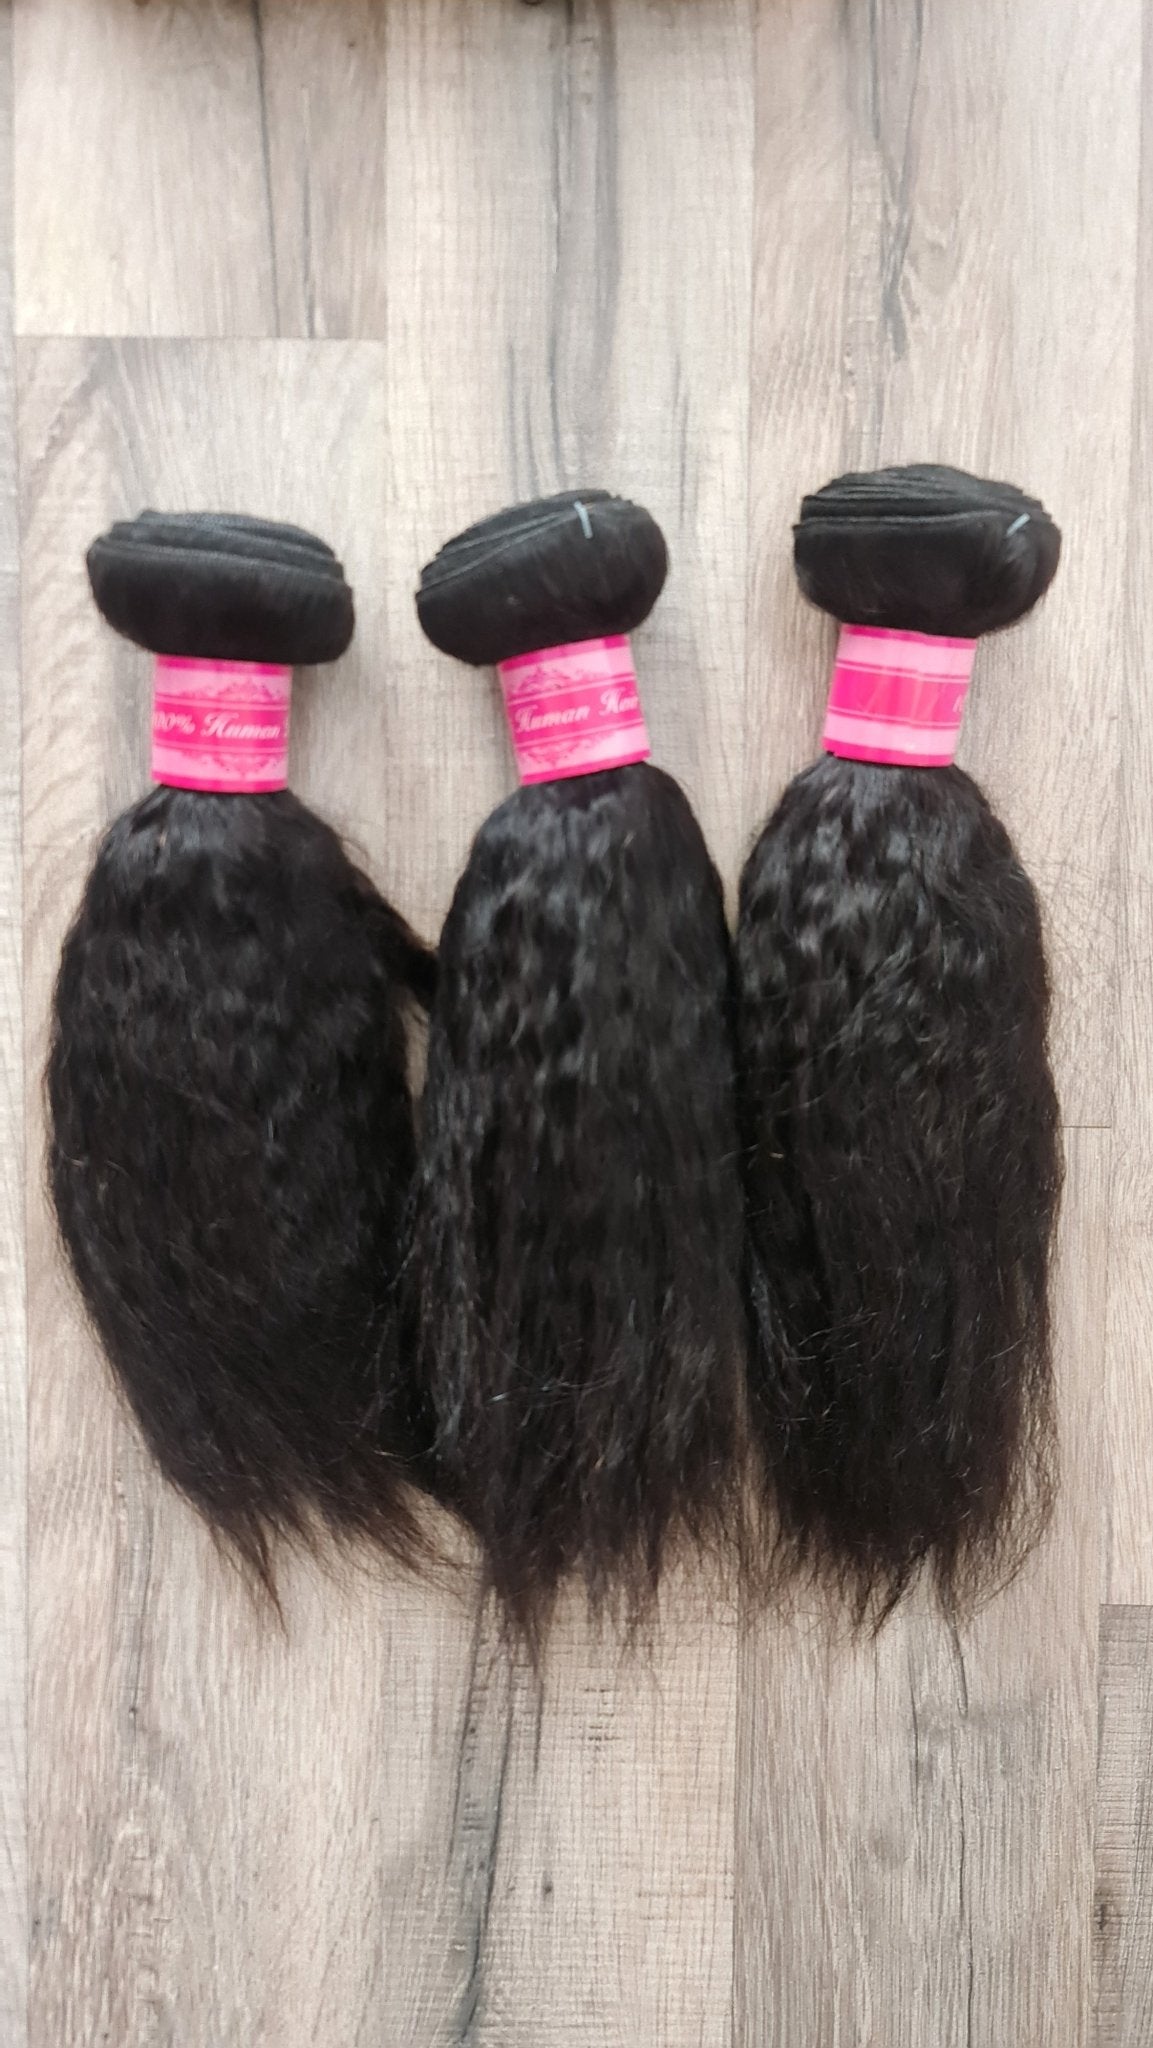 Sales 3 Packs Hair Extensions 10" 25cmDiosa Extensions Haarverlängerungen